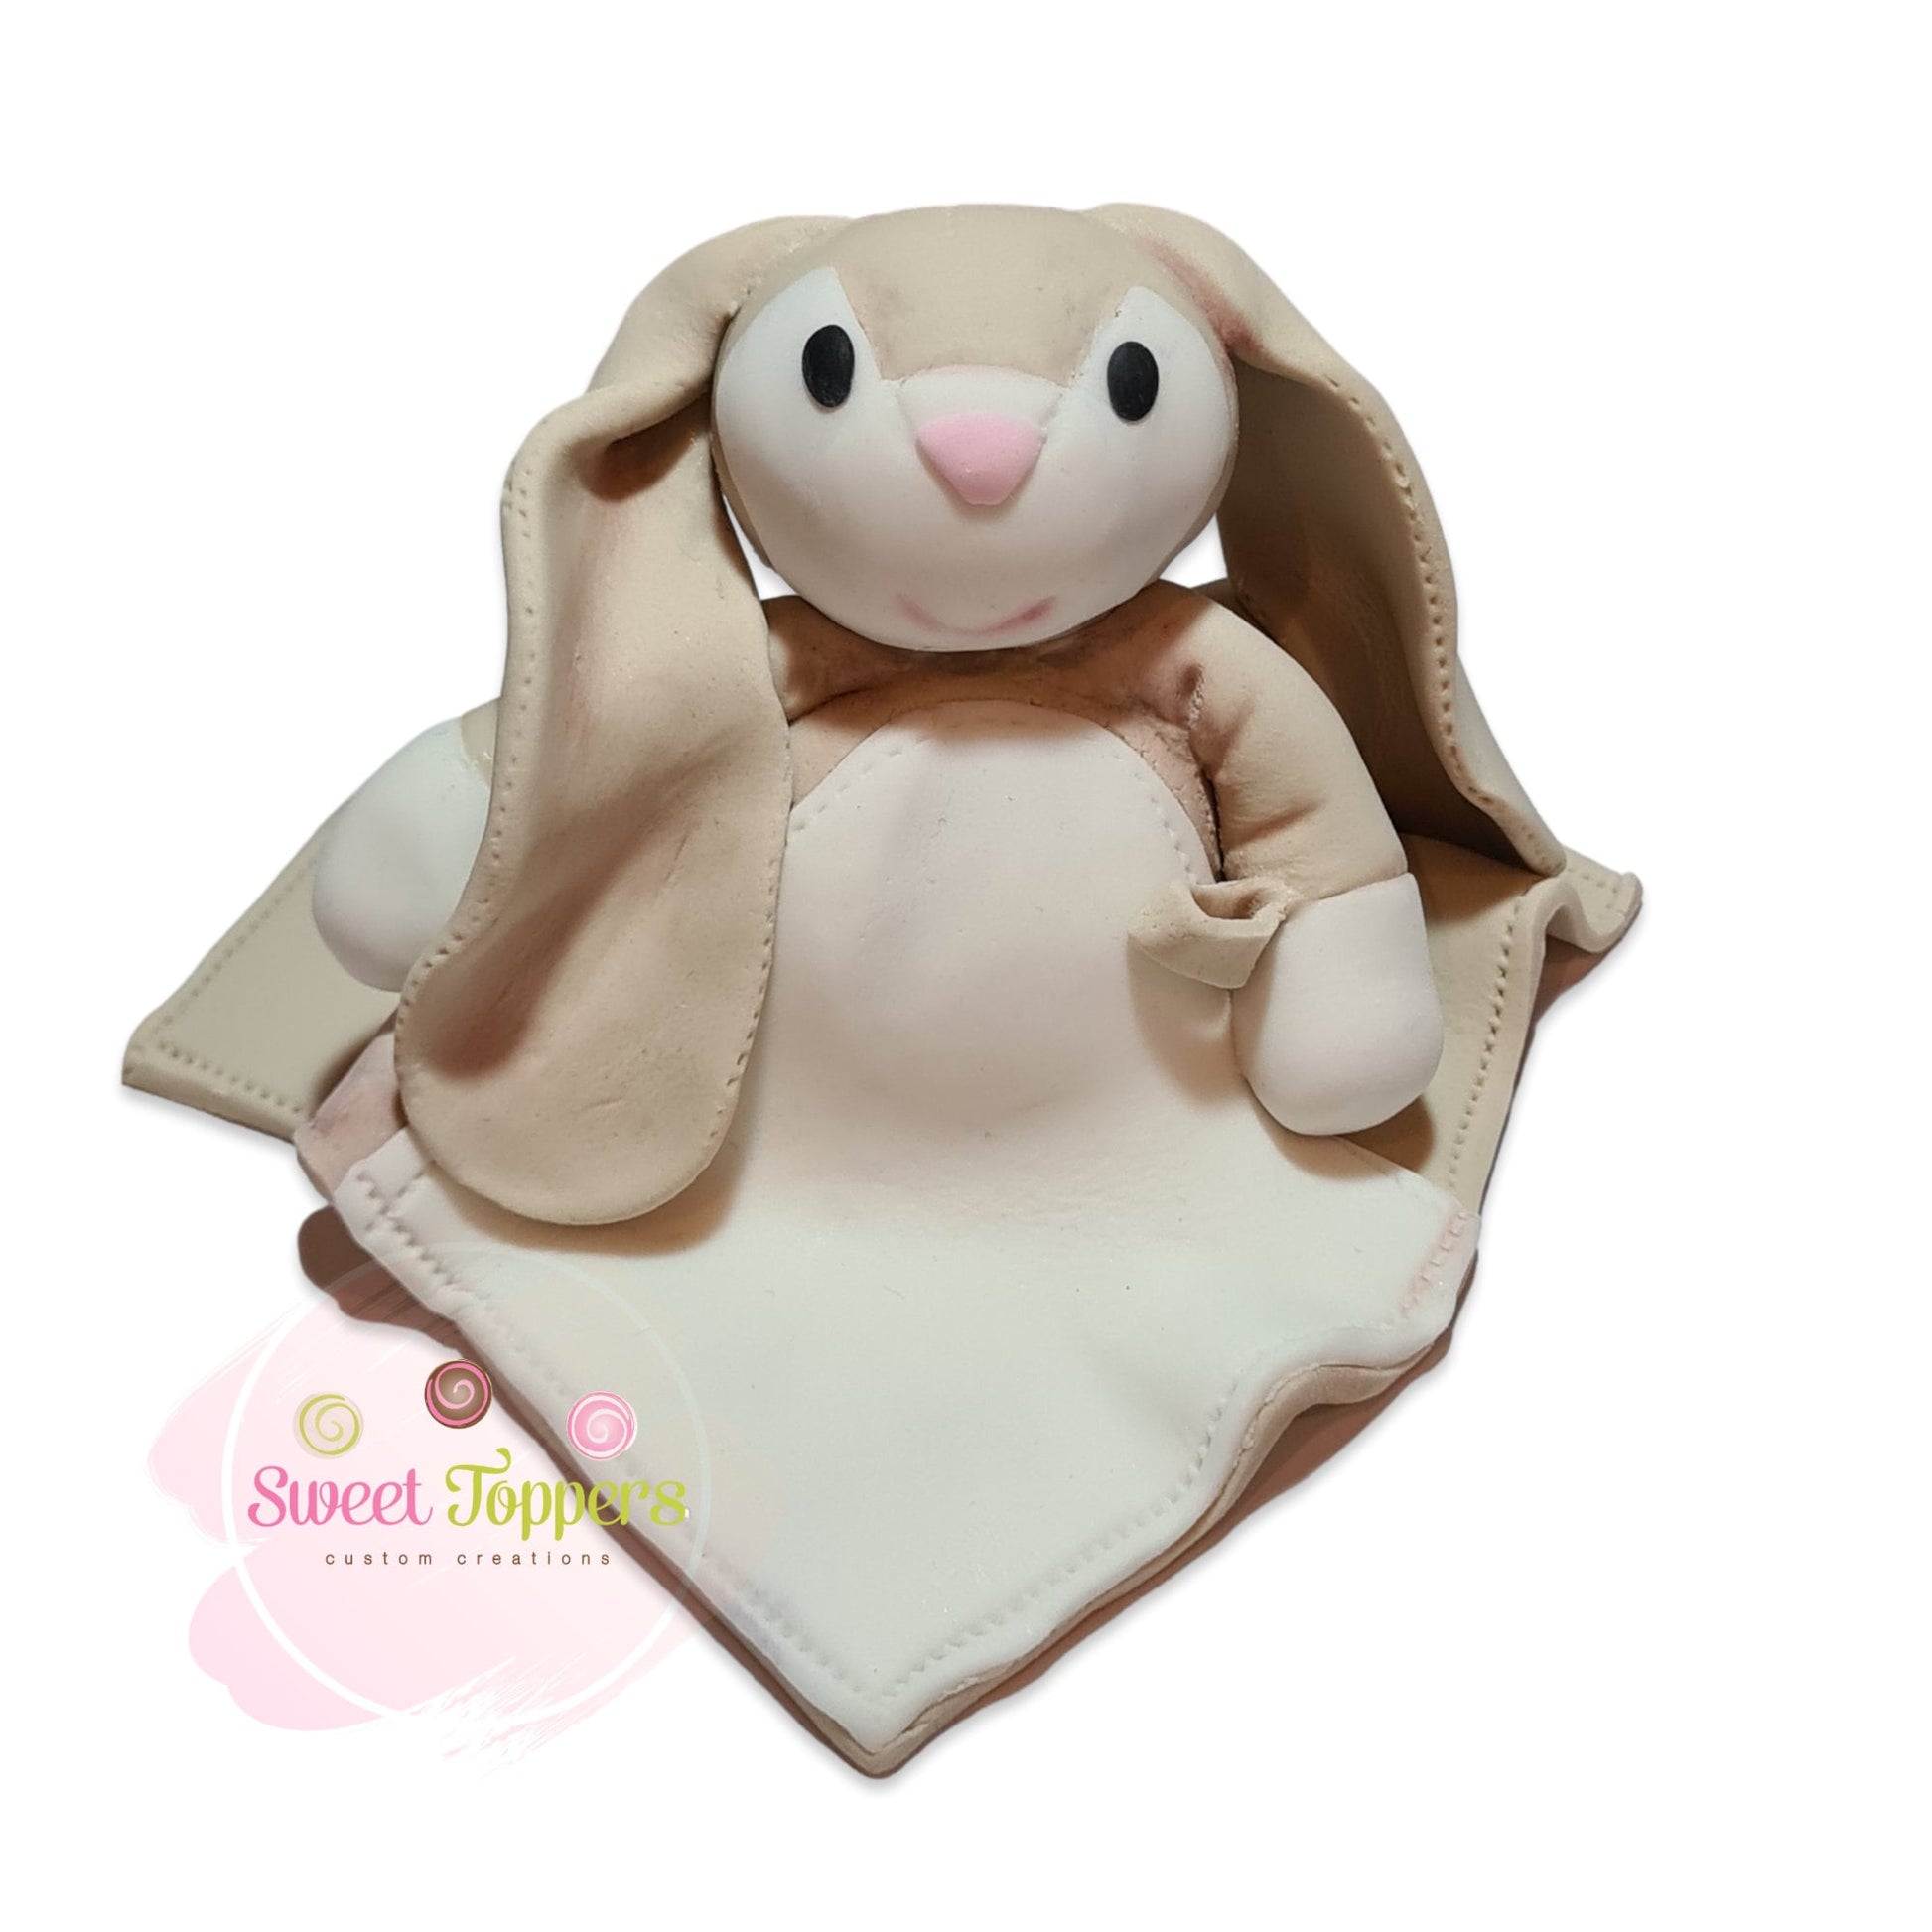 Bunny snuggle comforter cake topper riff raff fondant edible cake decoration